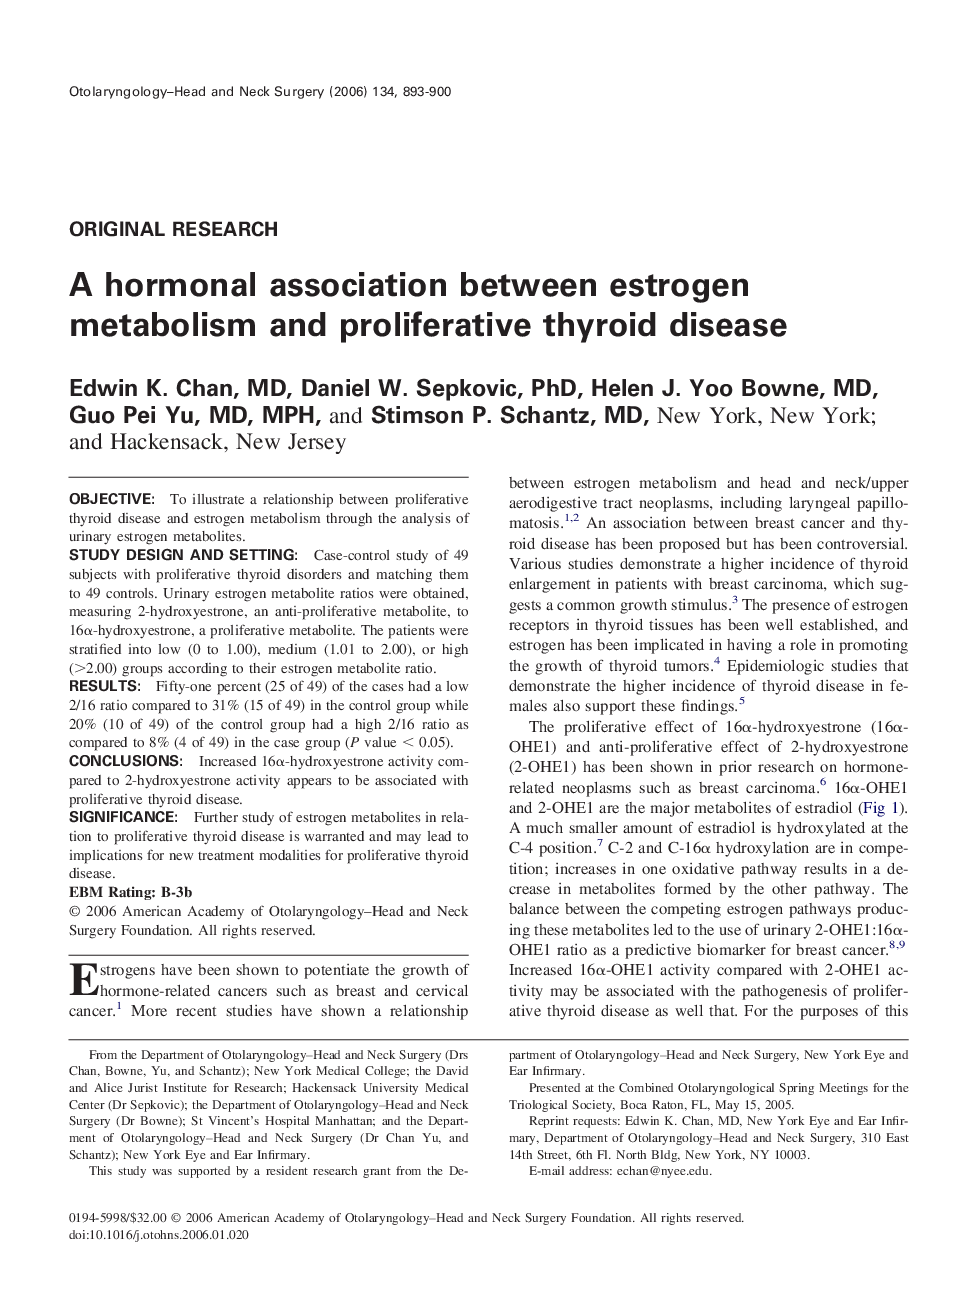 A hormonal association between estrogen metabolism and proliferative thyroid disease